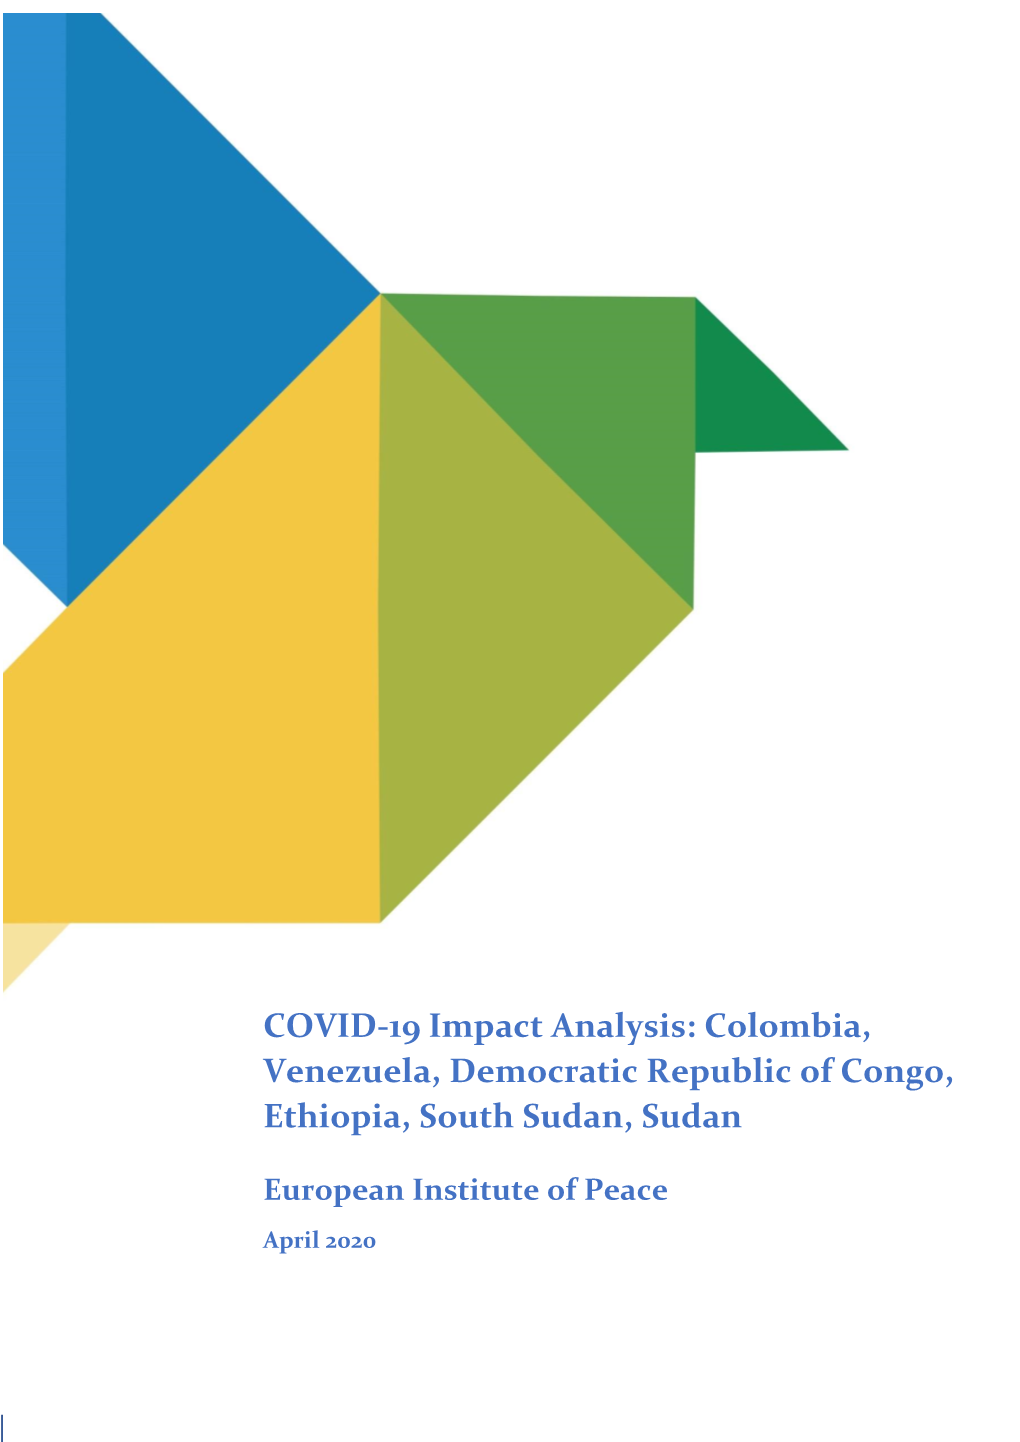 COVID-19 Impact Analysis: Colombia, Venezuela, Democratic Republic of Congo, Ethiopia, South Sudan, Sudan